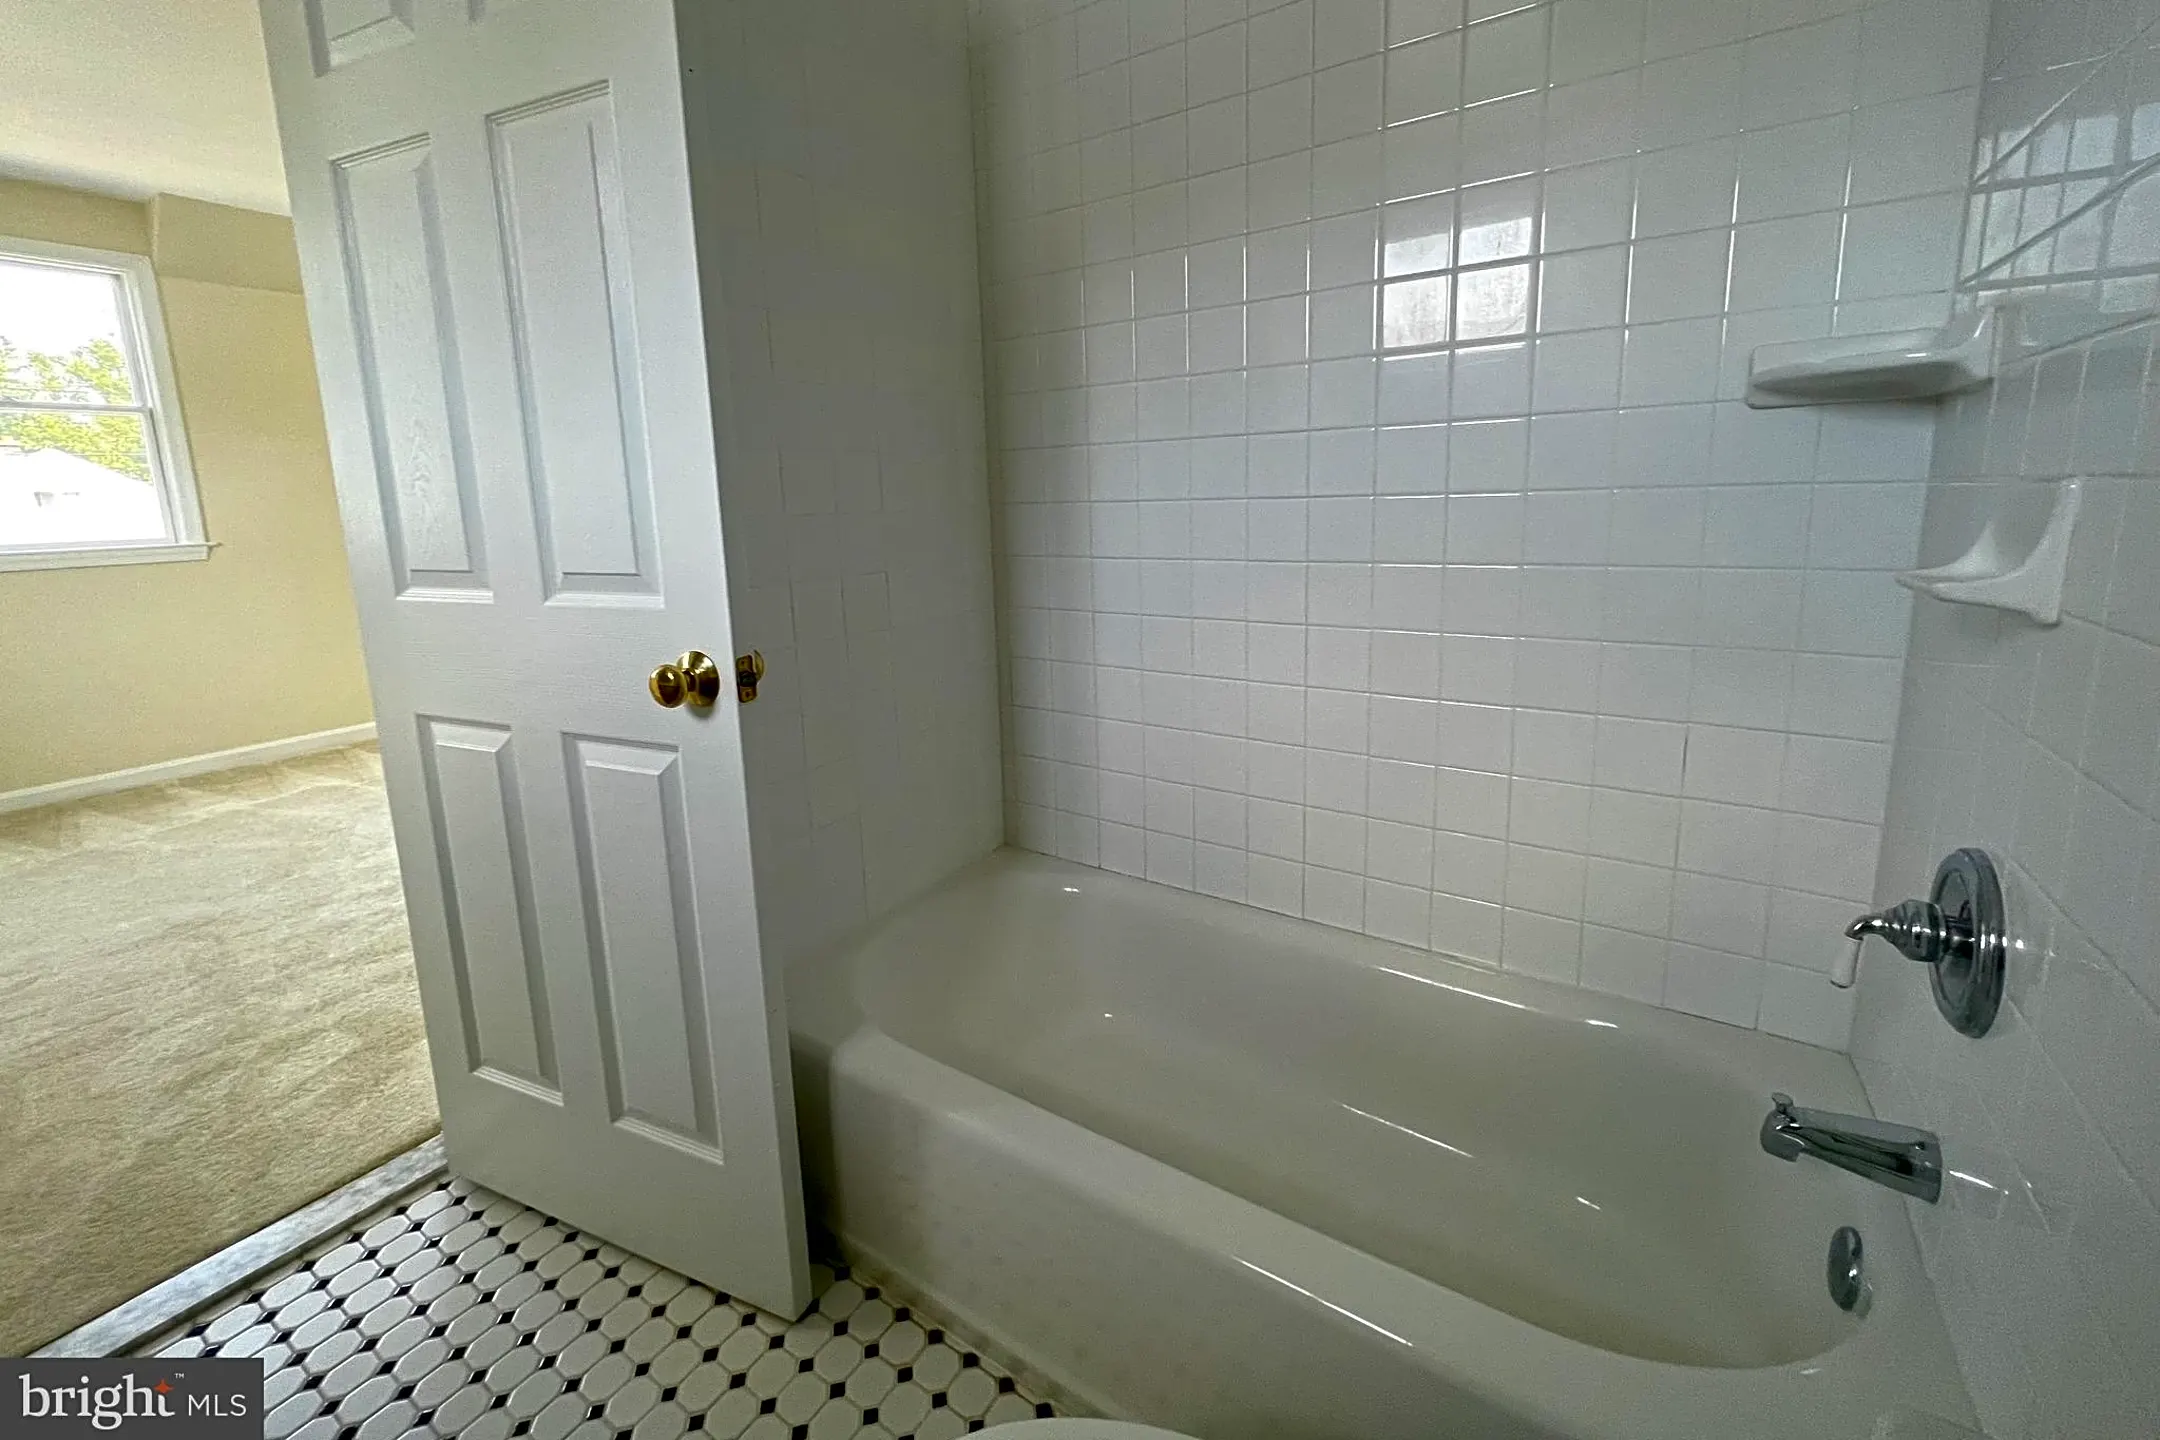 Bathroom - 1010 19th St S - Arlington, VA